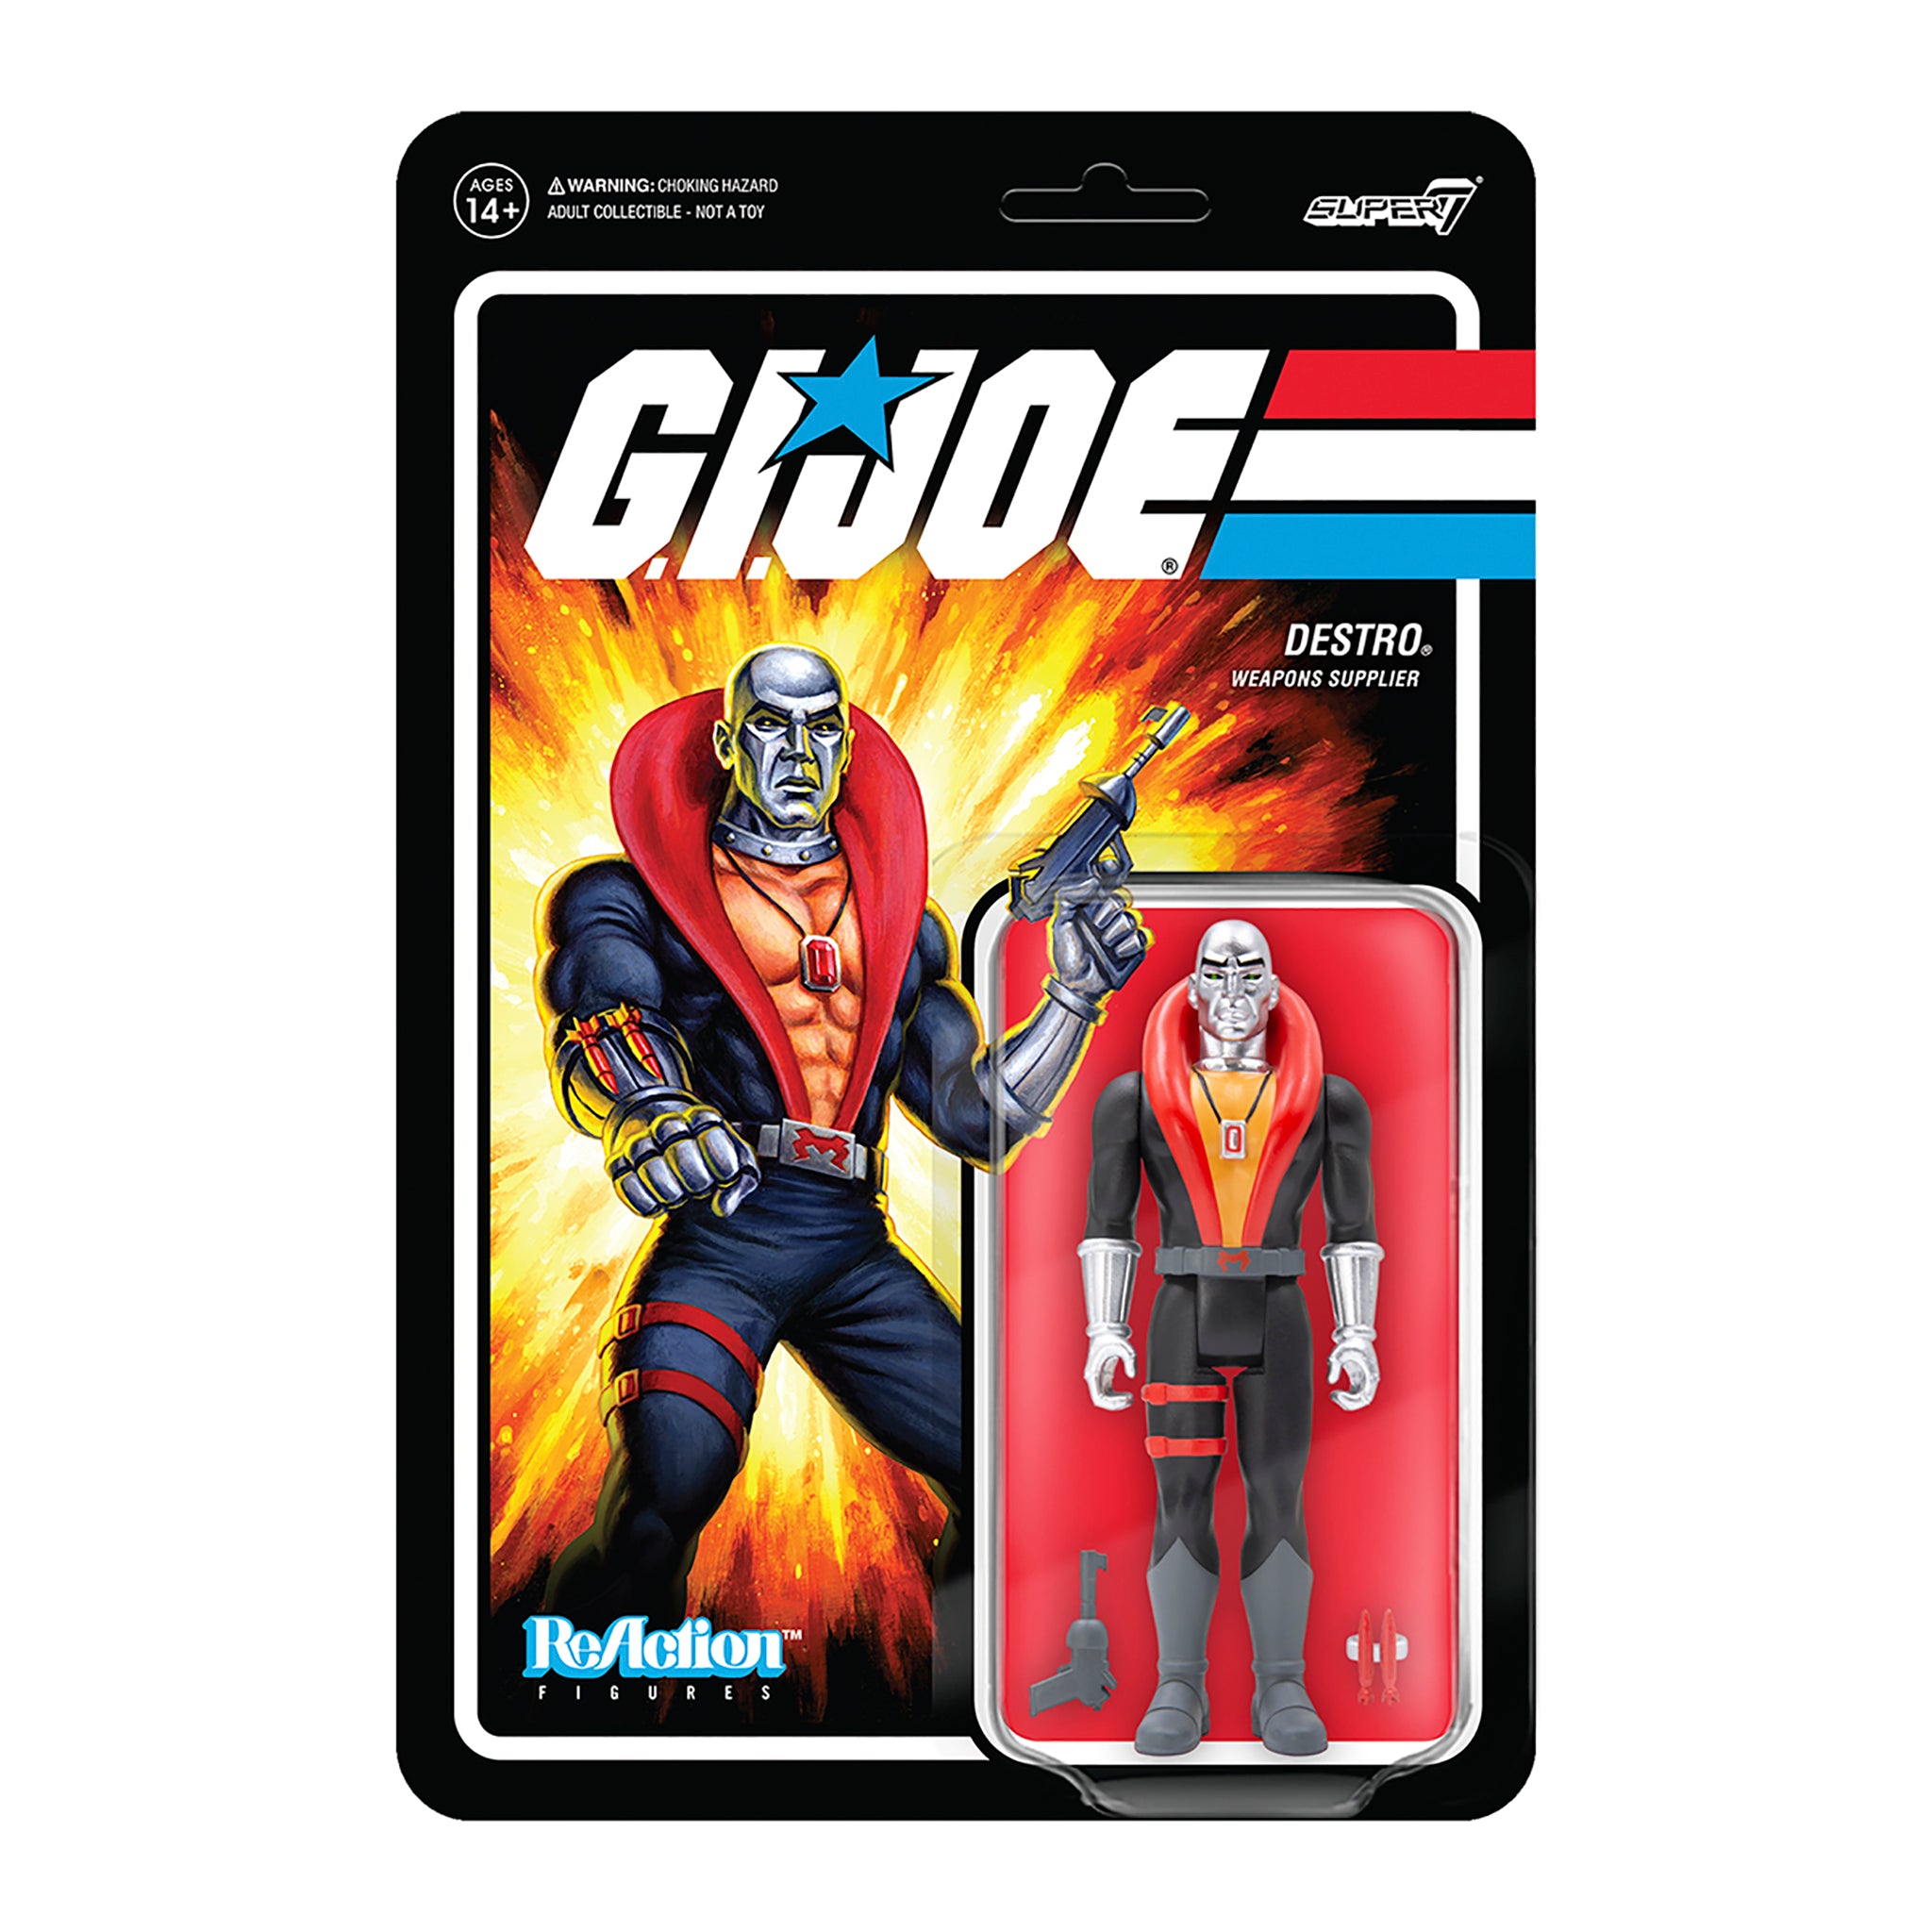 G.I. Joe ReAction Figures Wave 1 - Destro